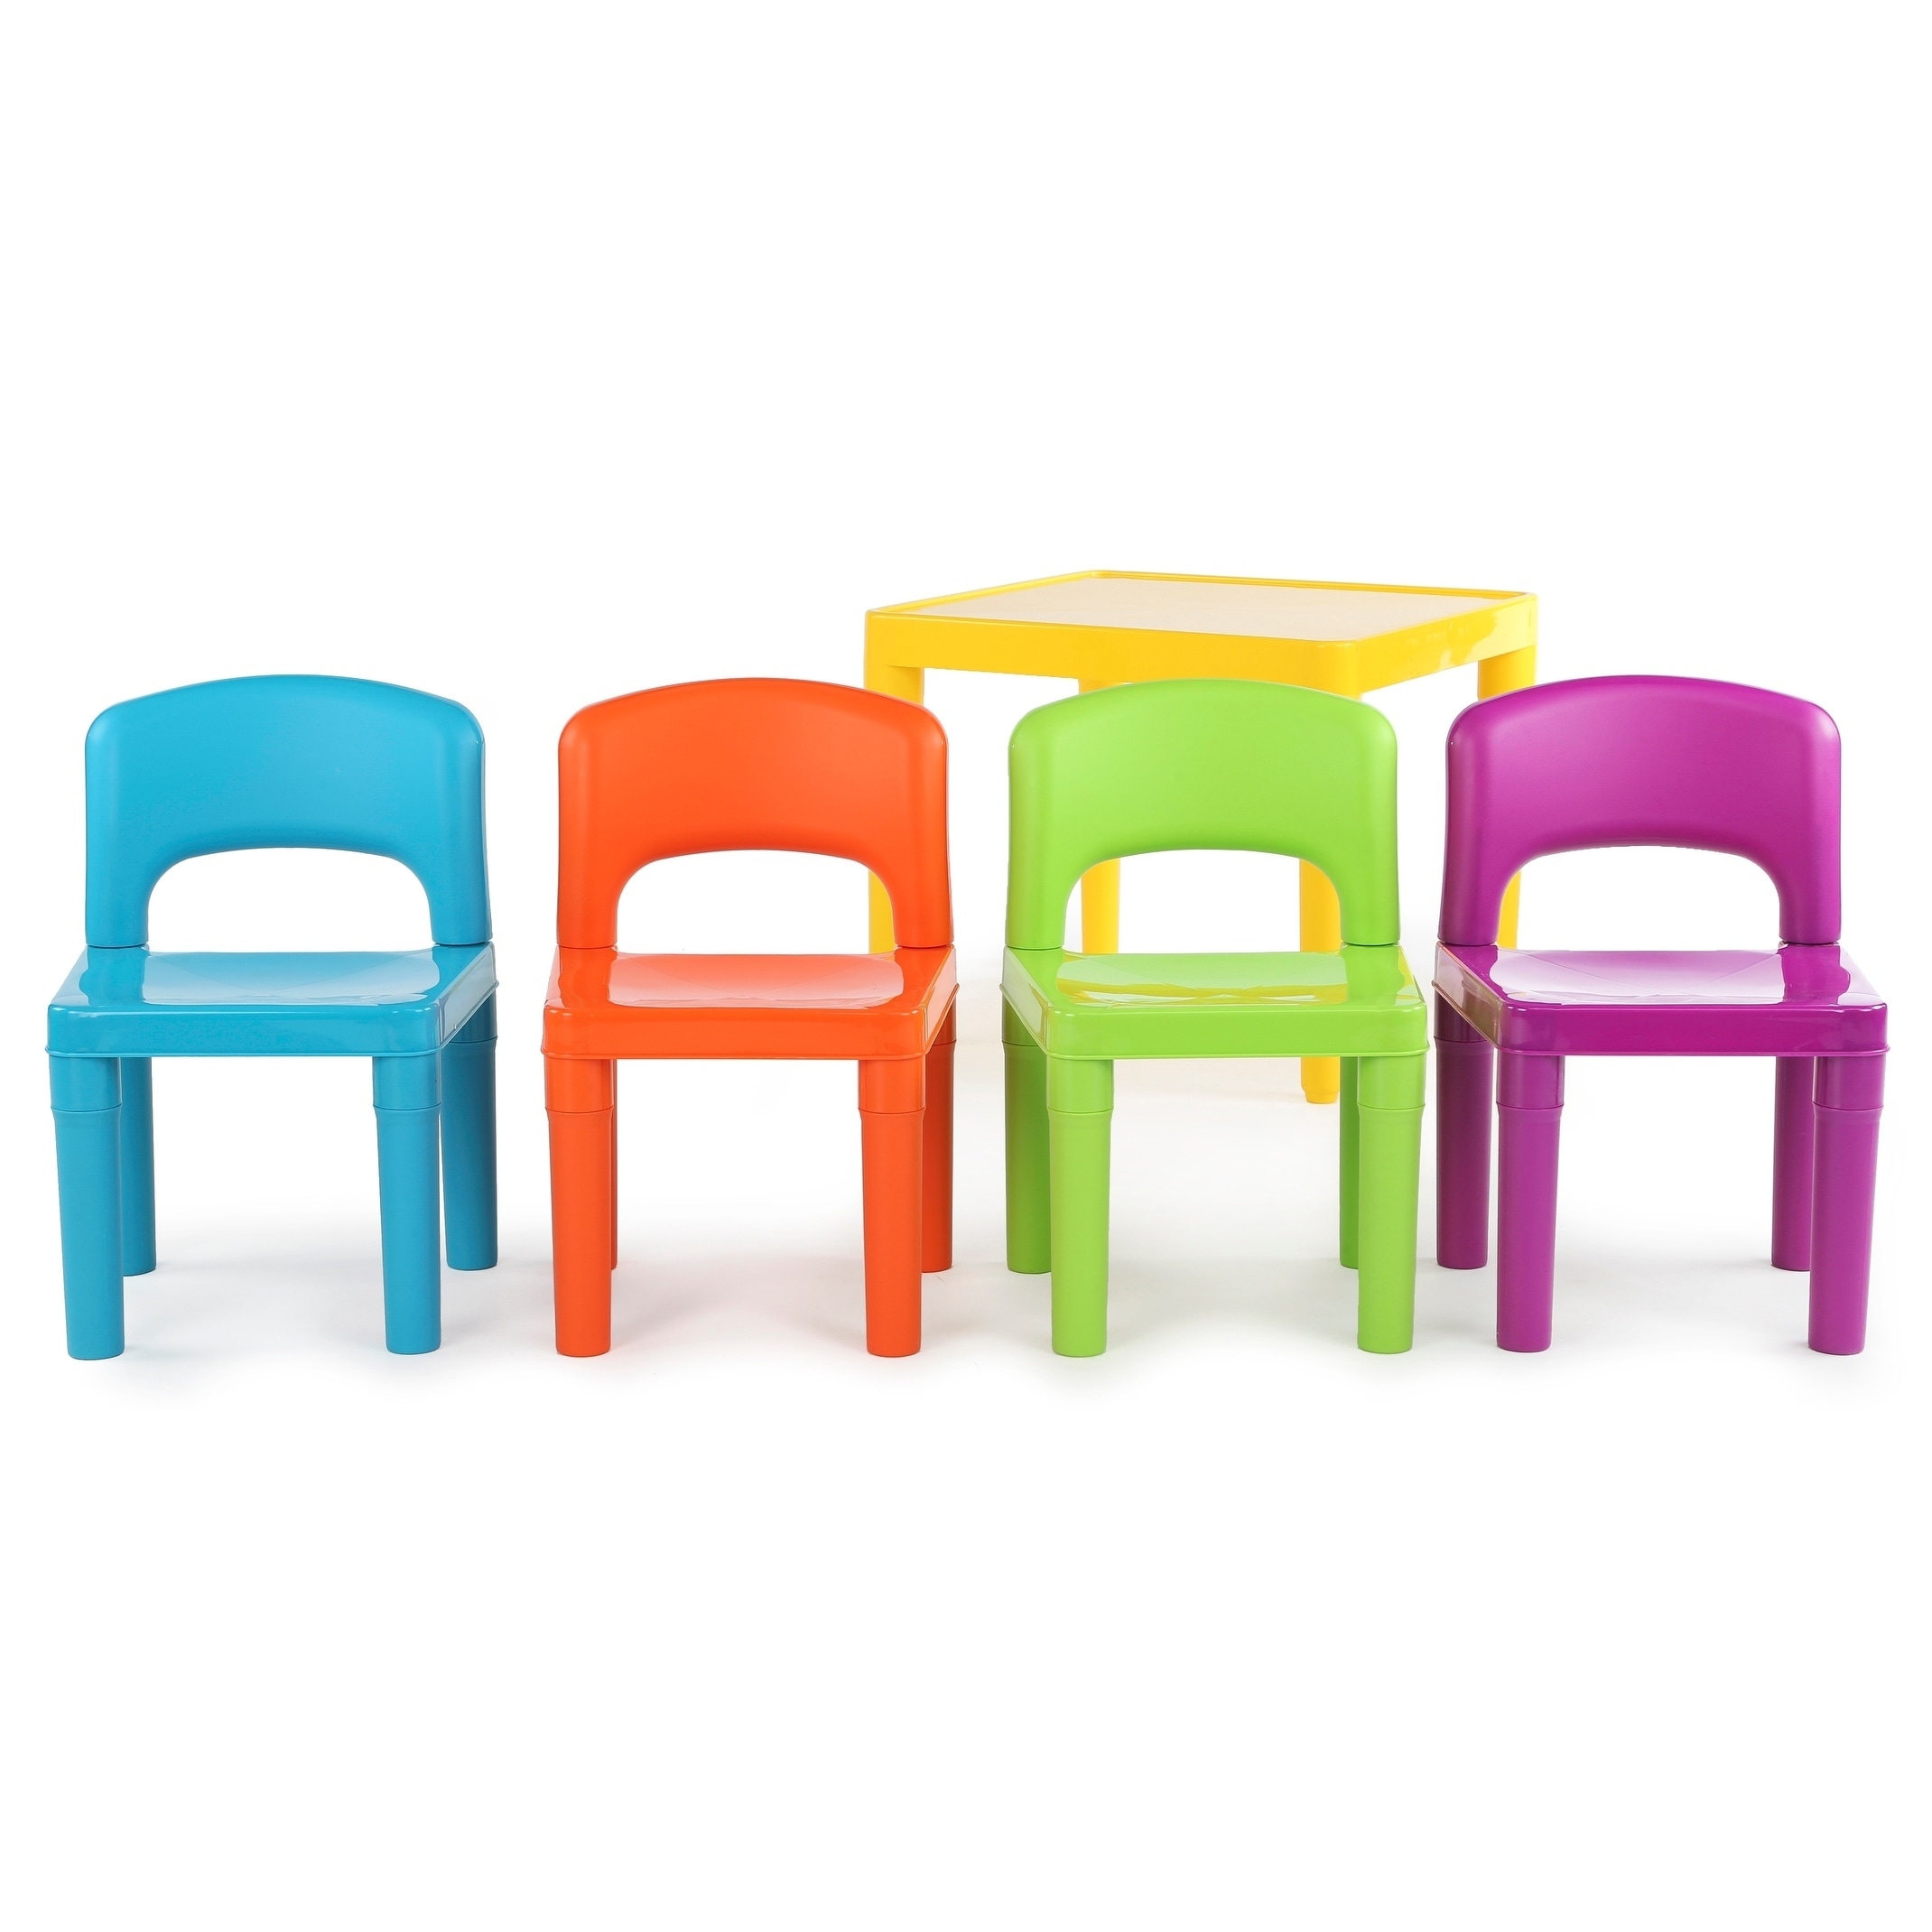 tot tutors plastic table and chair set